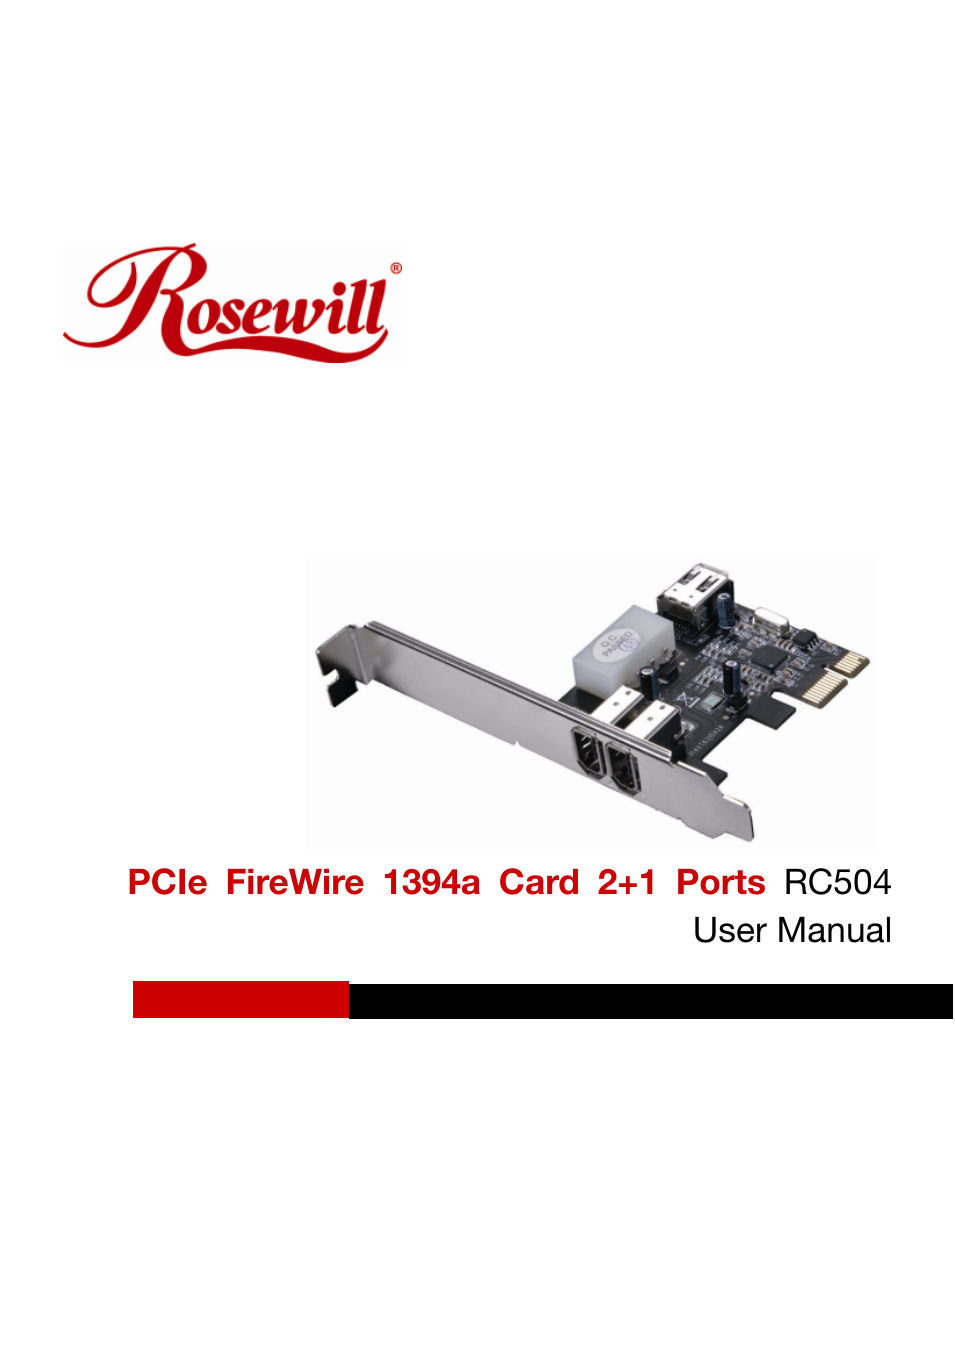 PCIe FireWire 1394a Card 2+1 Port RC504